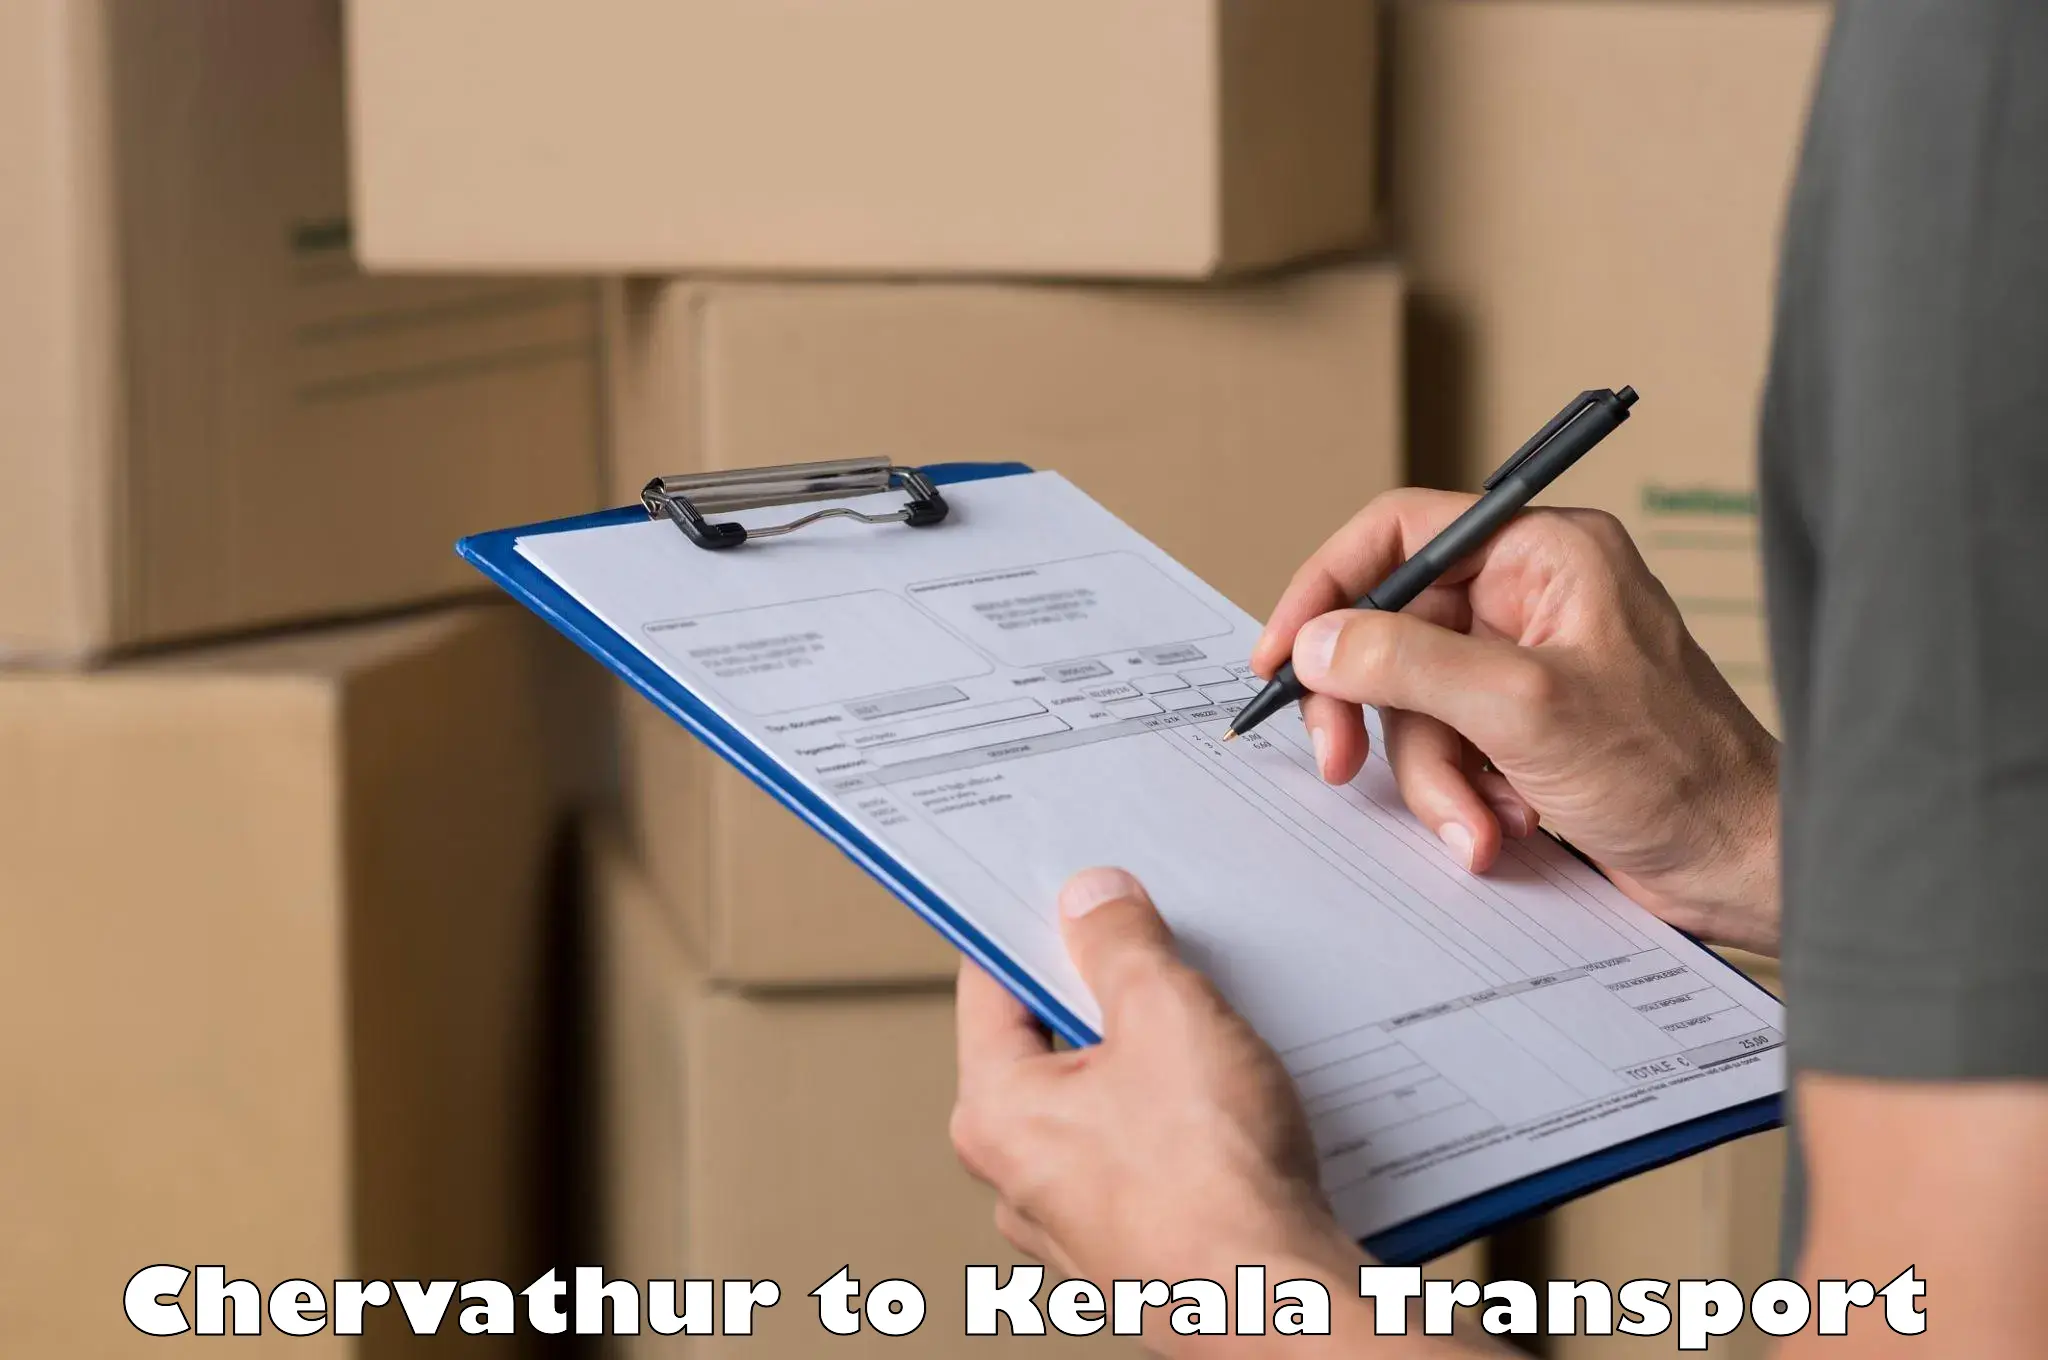 Furniture transport service Chervathur to Kattappana